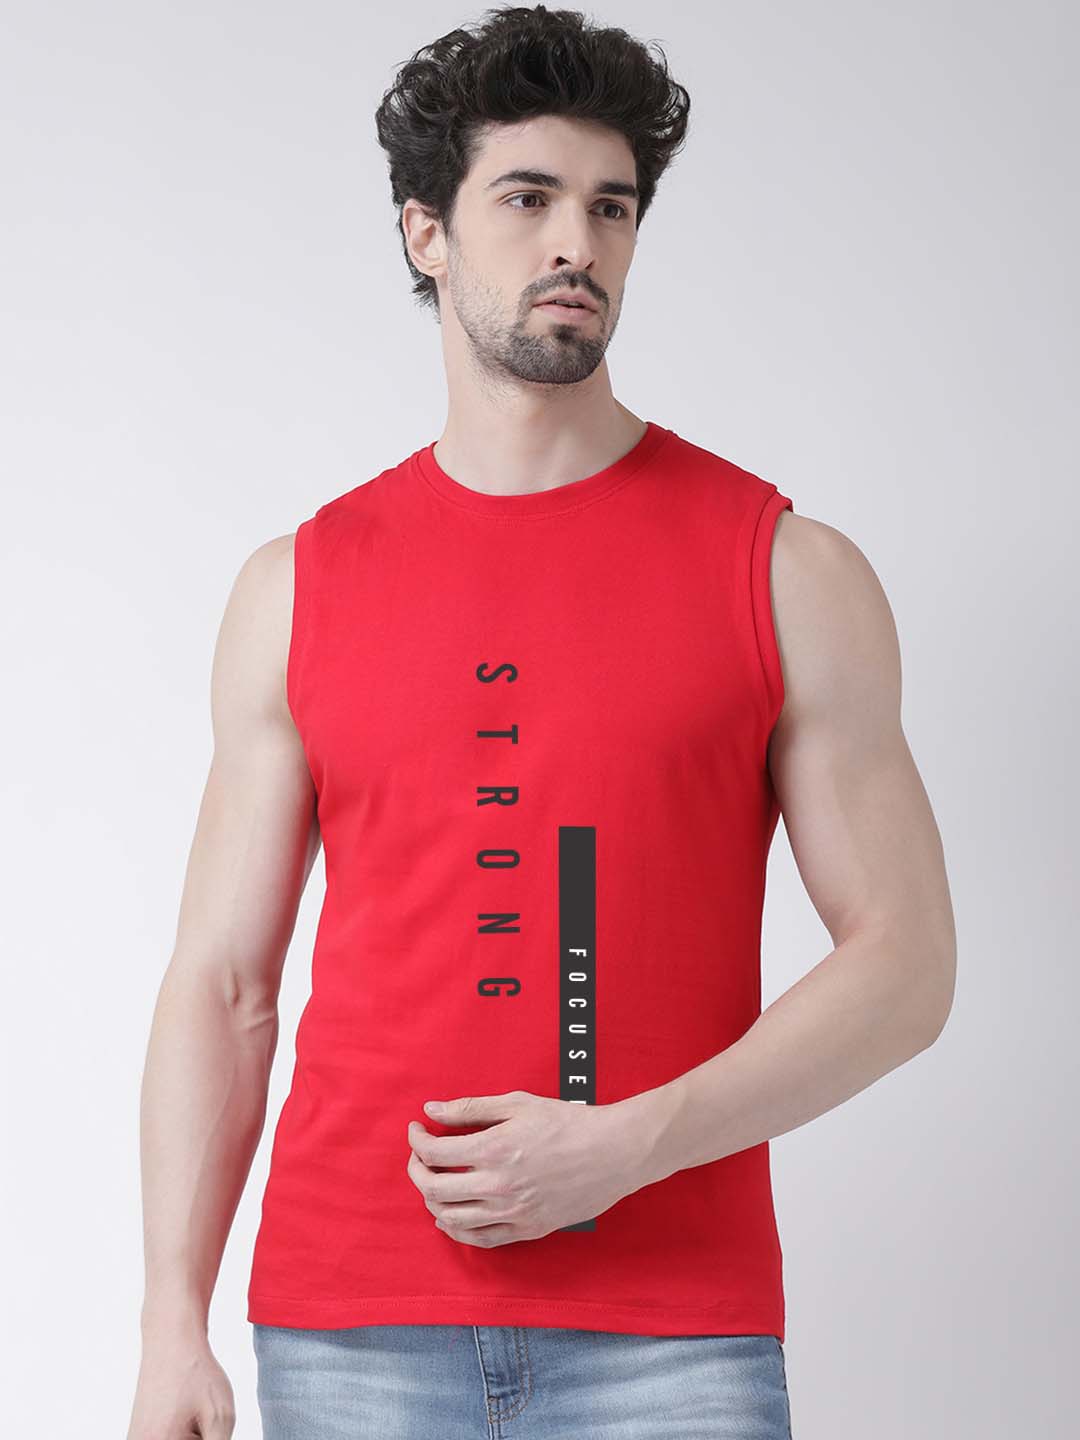 Men Strong Printed Cotton Gym Vest - Friskers